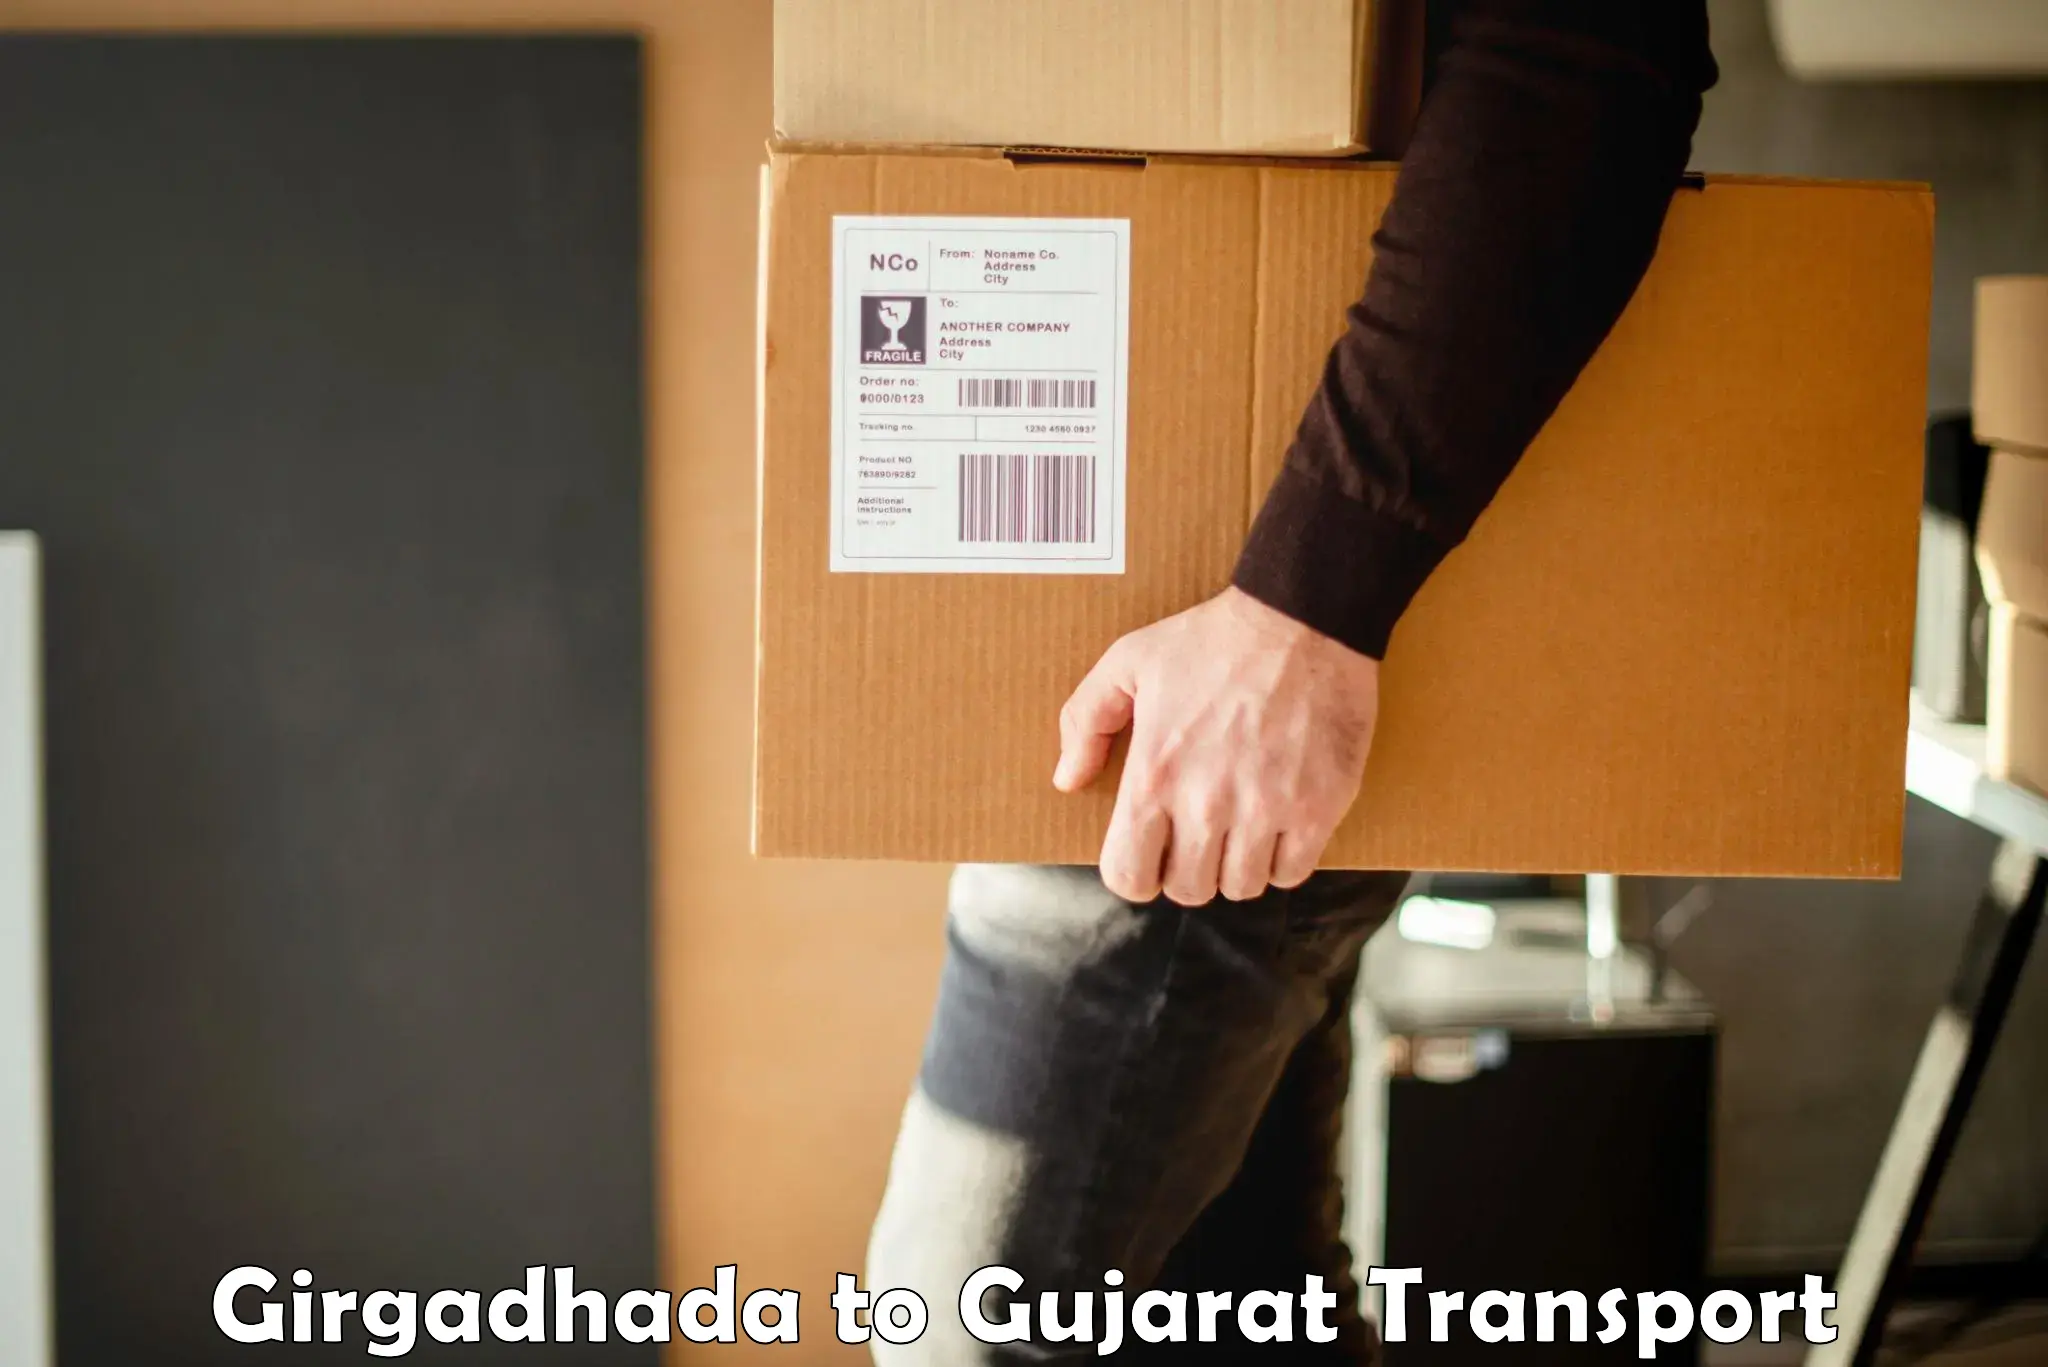 Truck transport companies in India Girgadhada to Ahmedabad